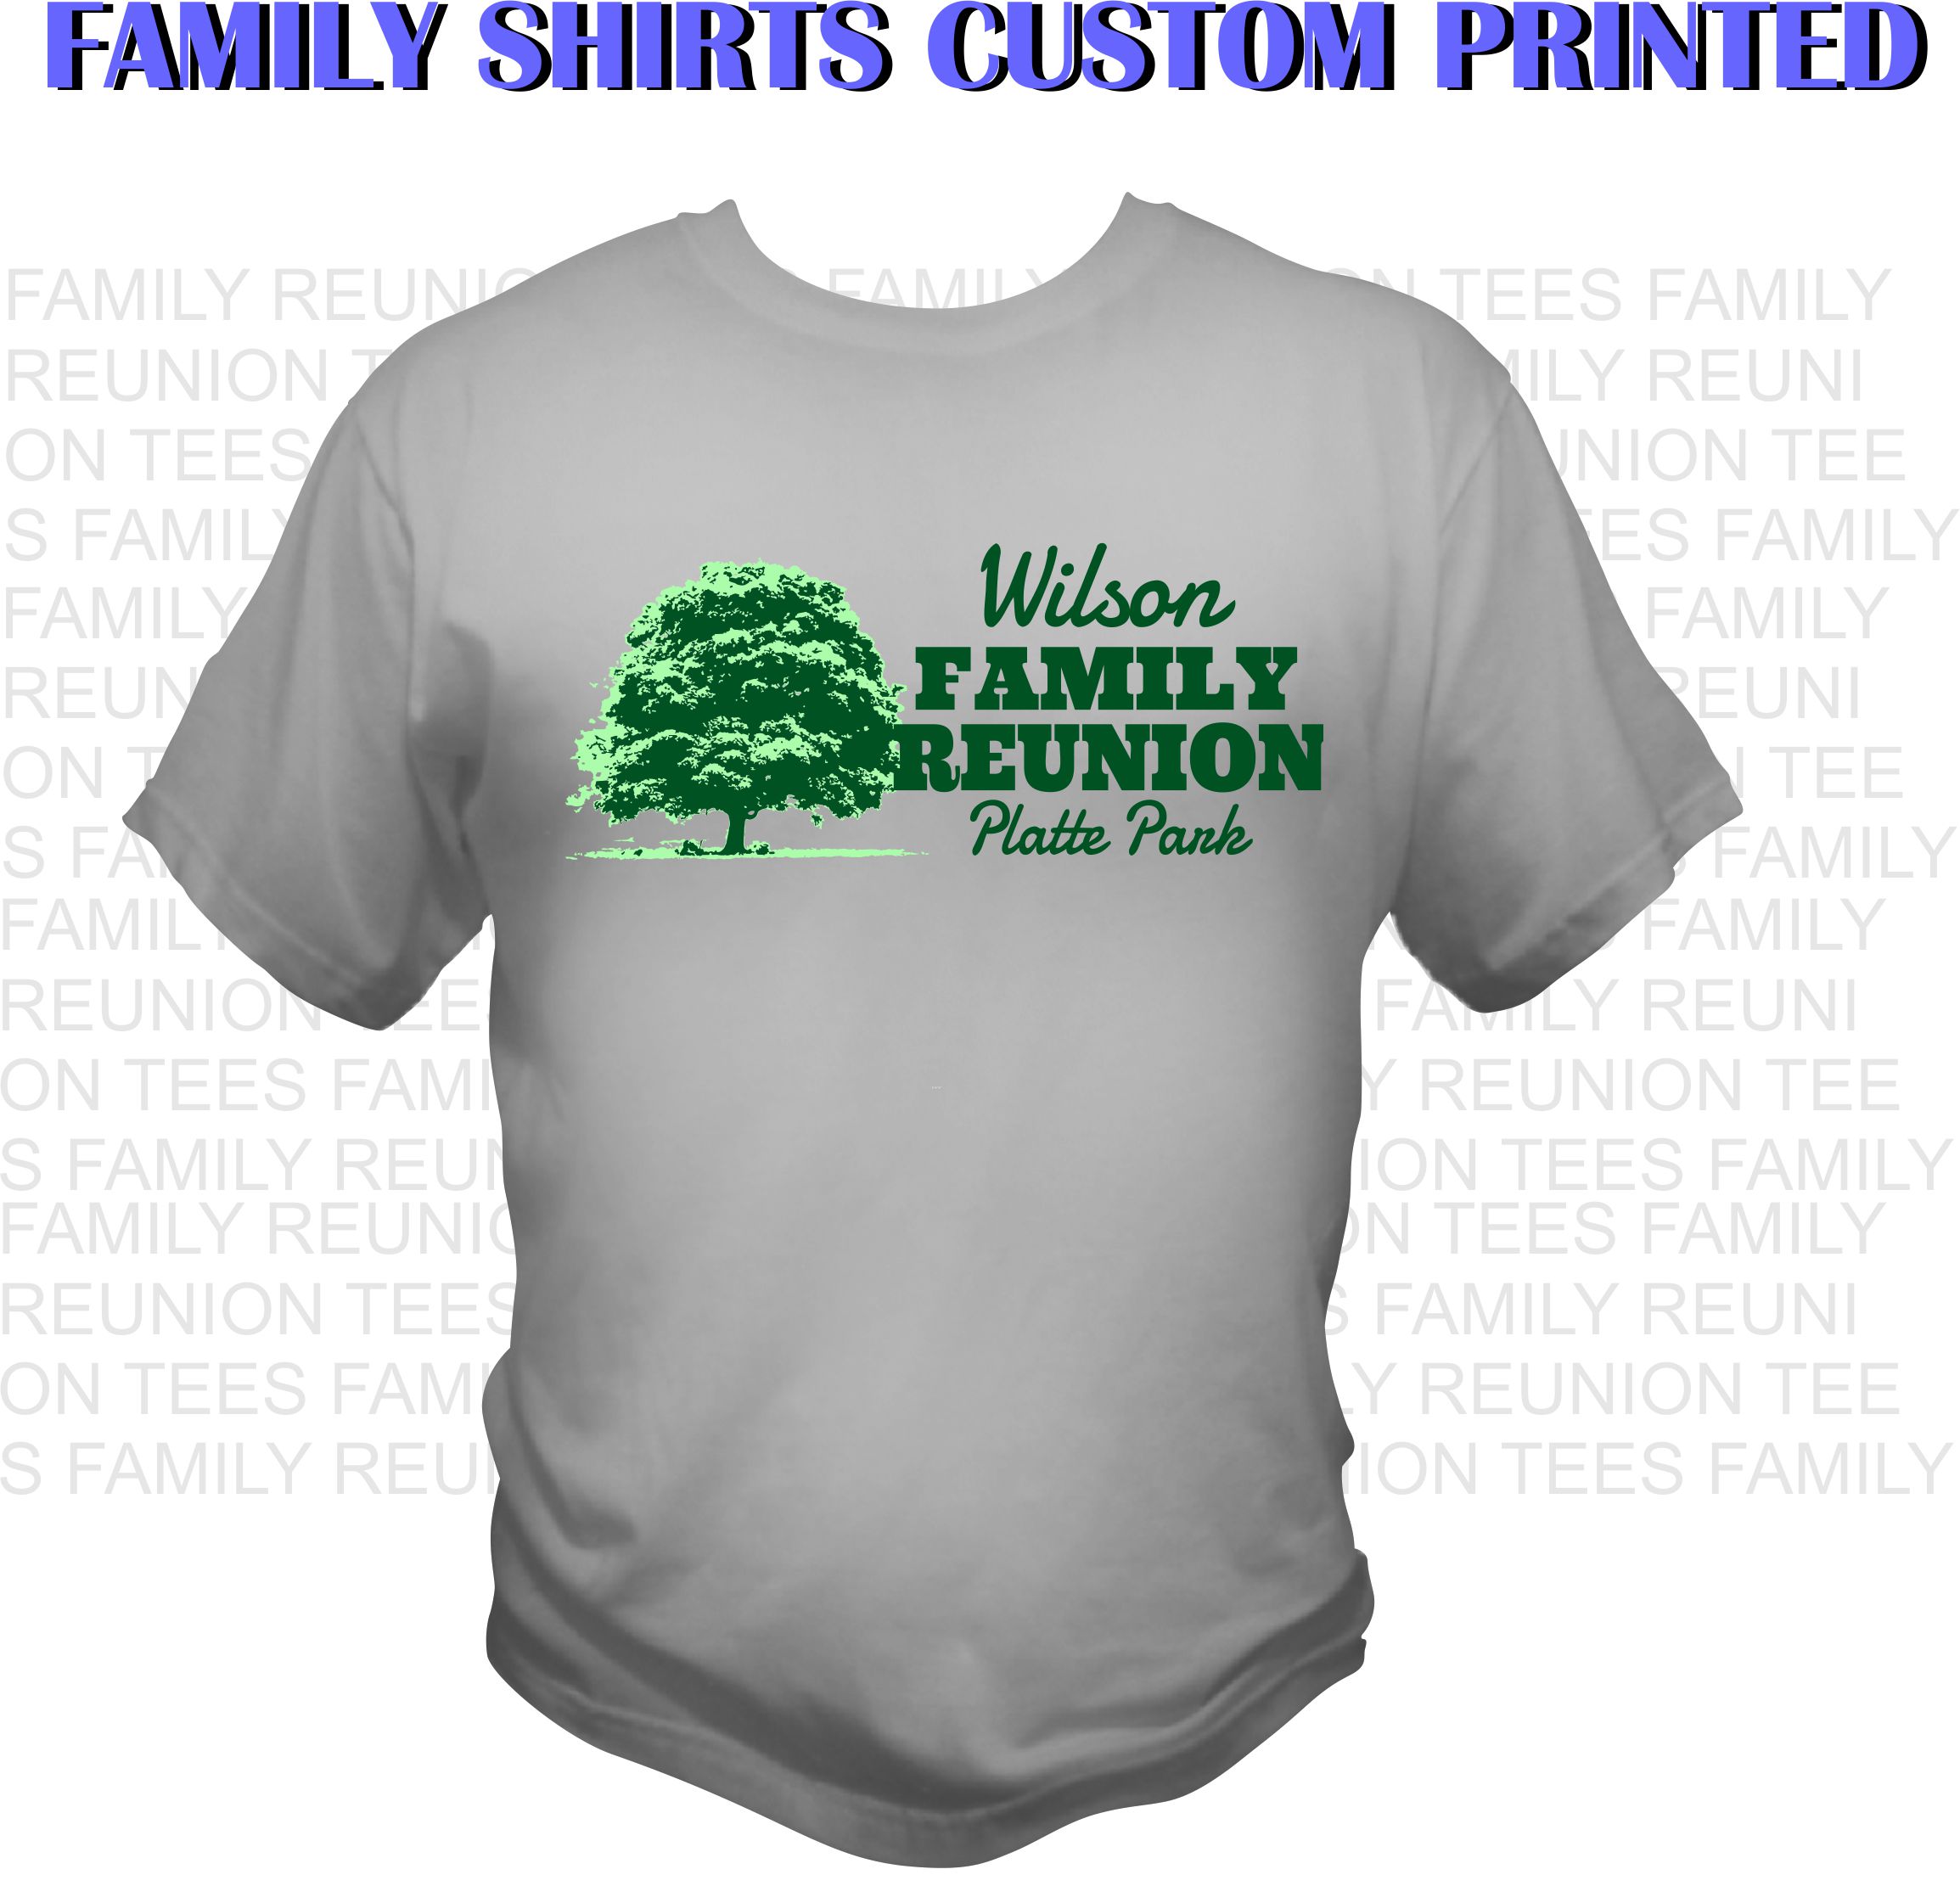 Family T-shirts custom printed